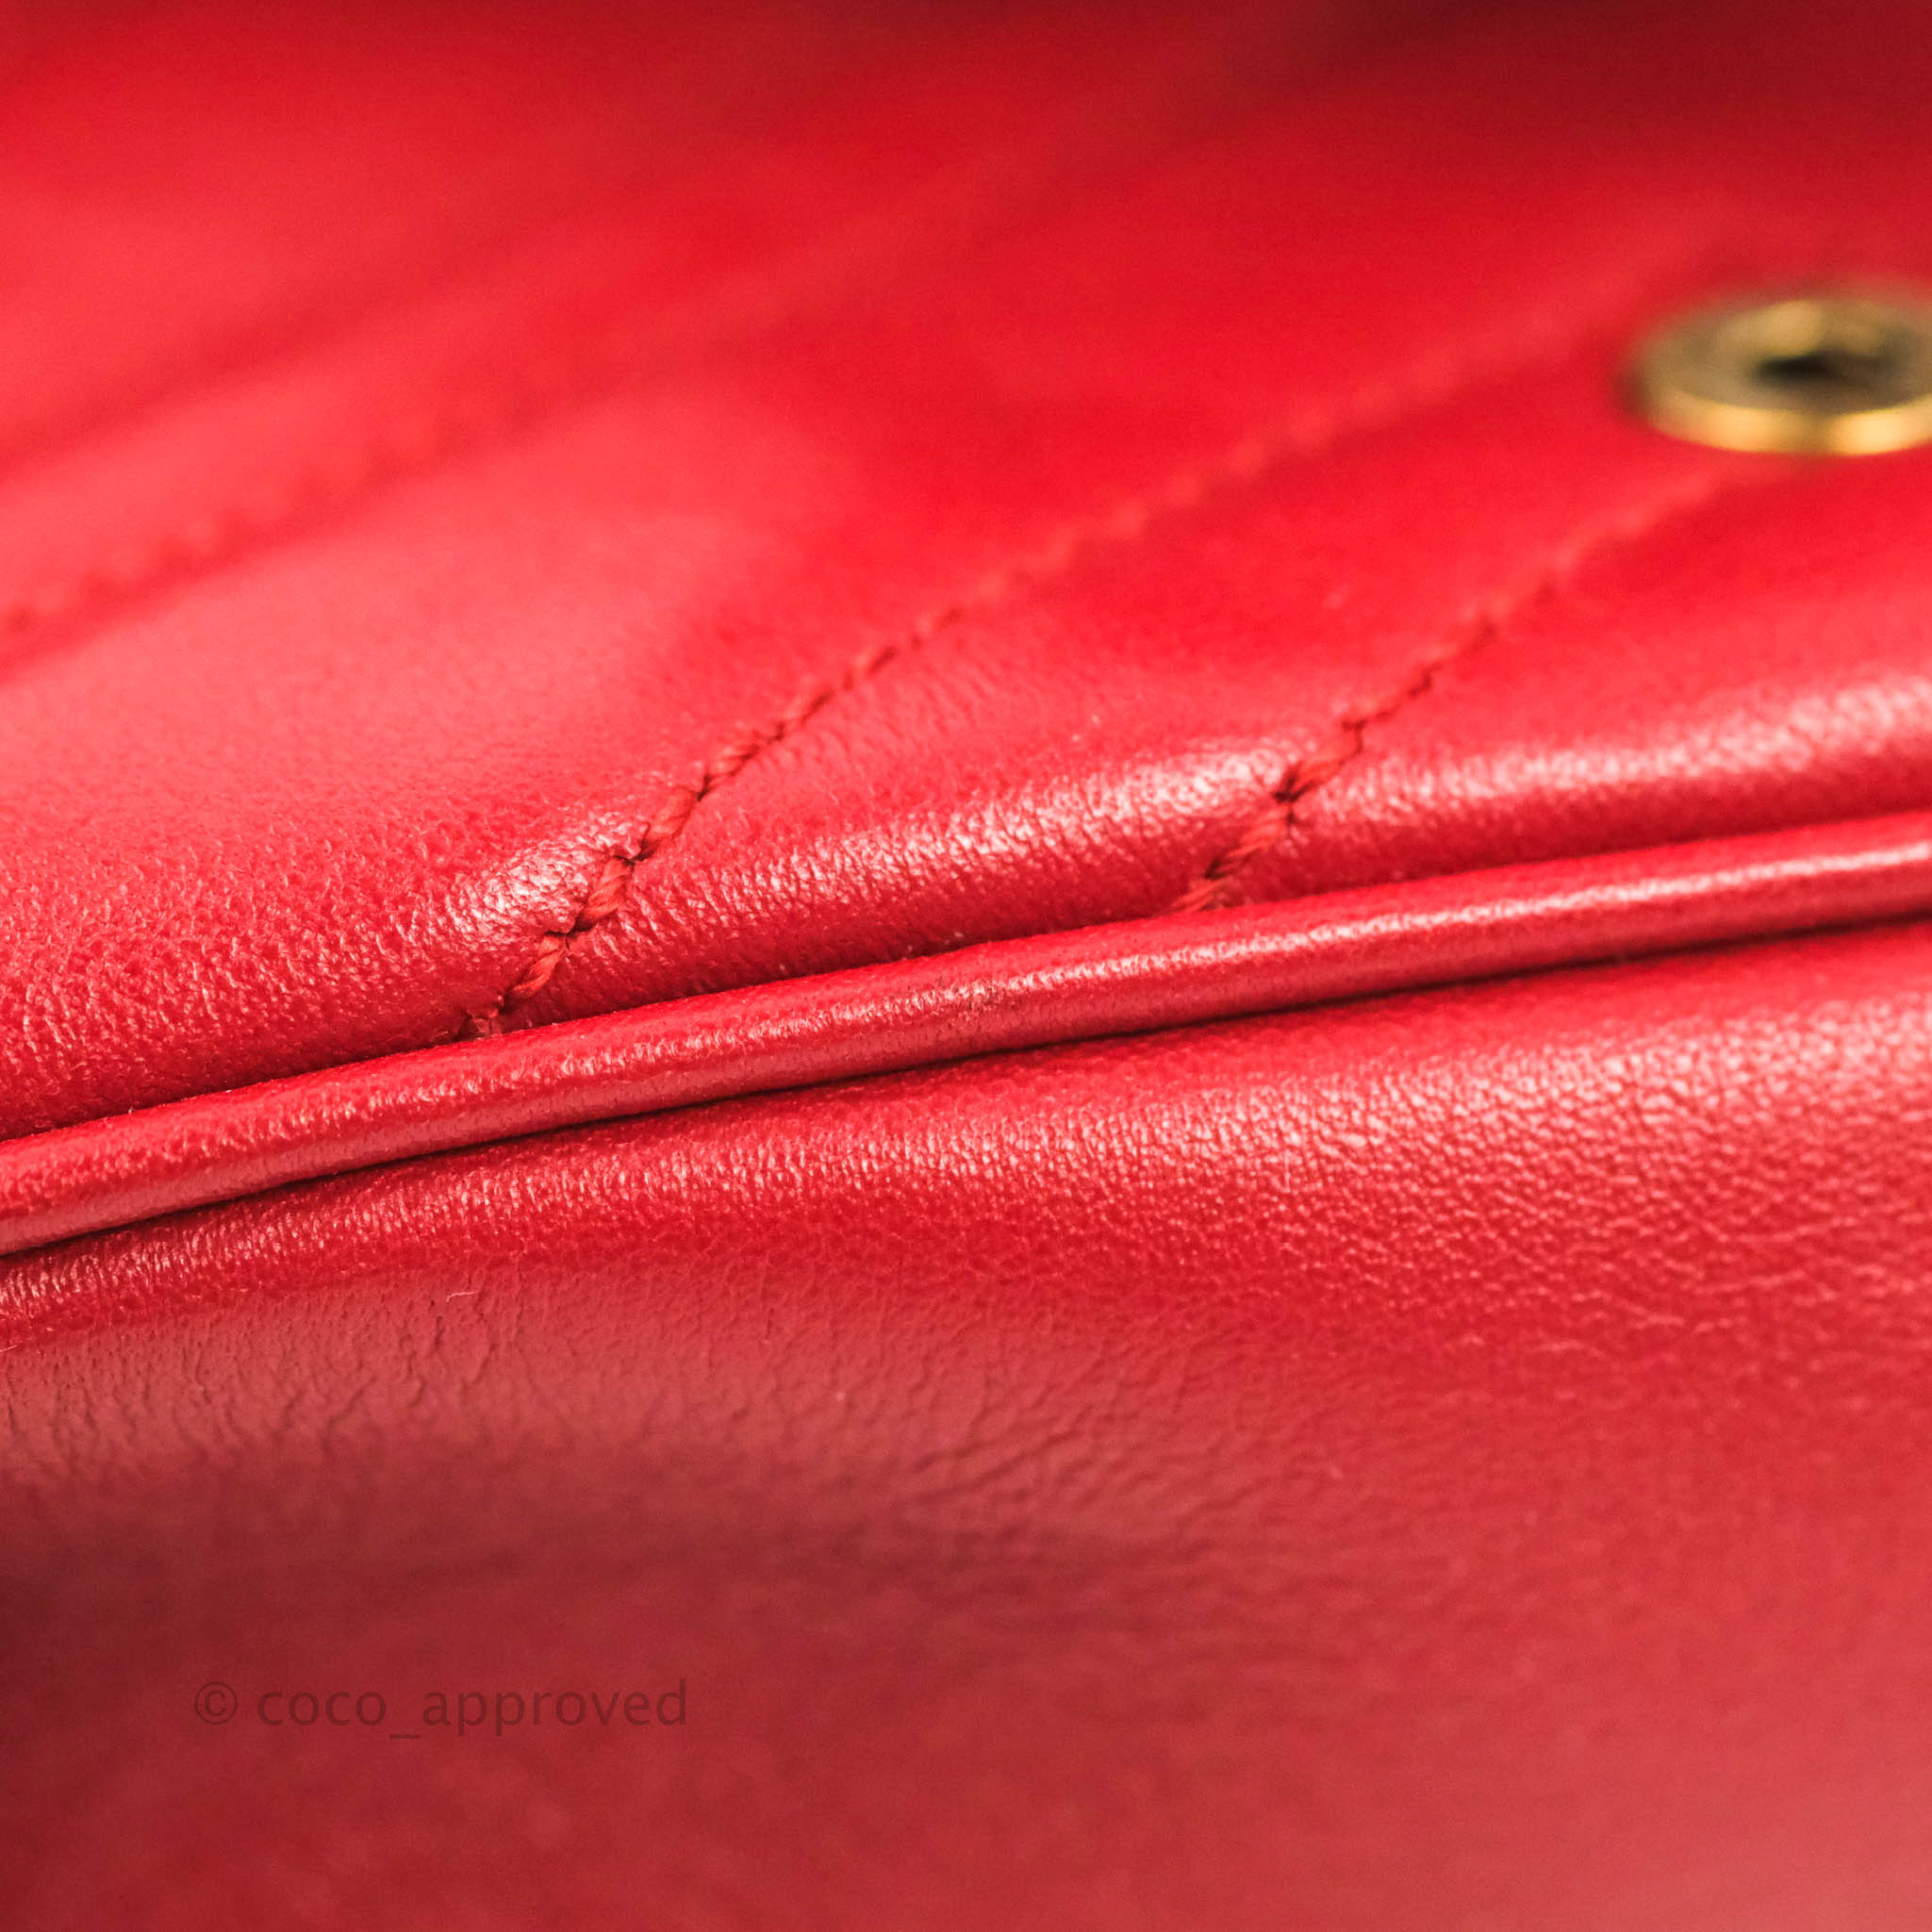 GG Marmont matelassé super mini bag in red leather